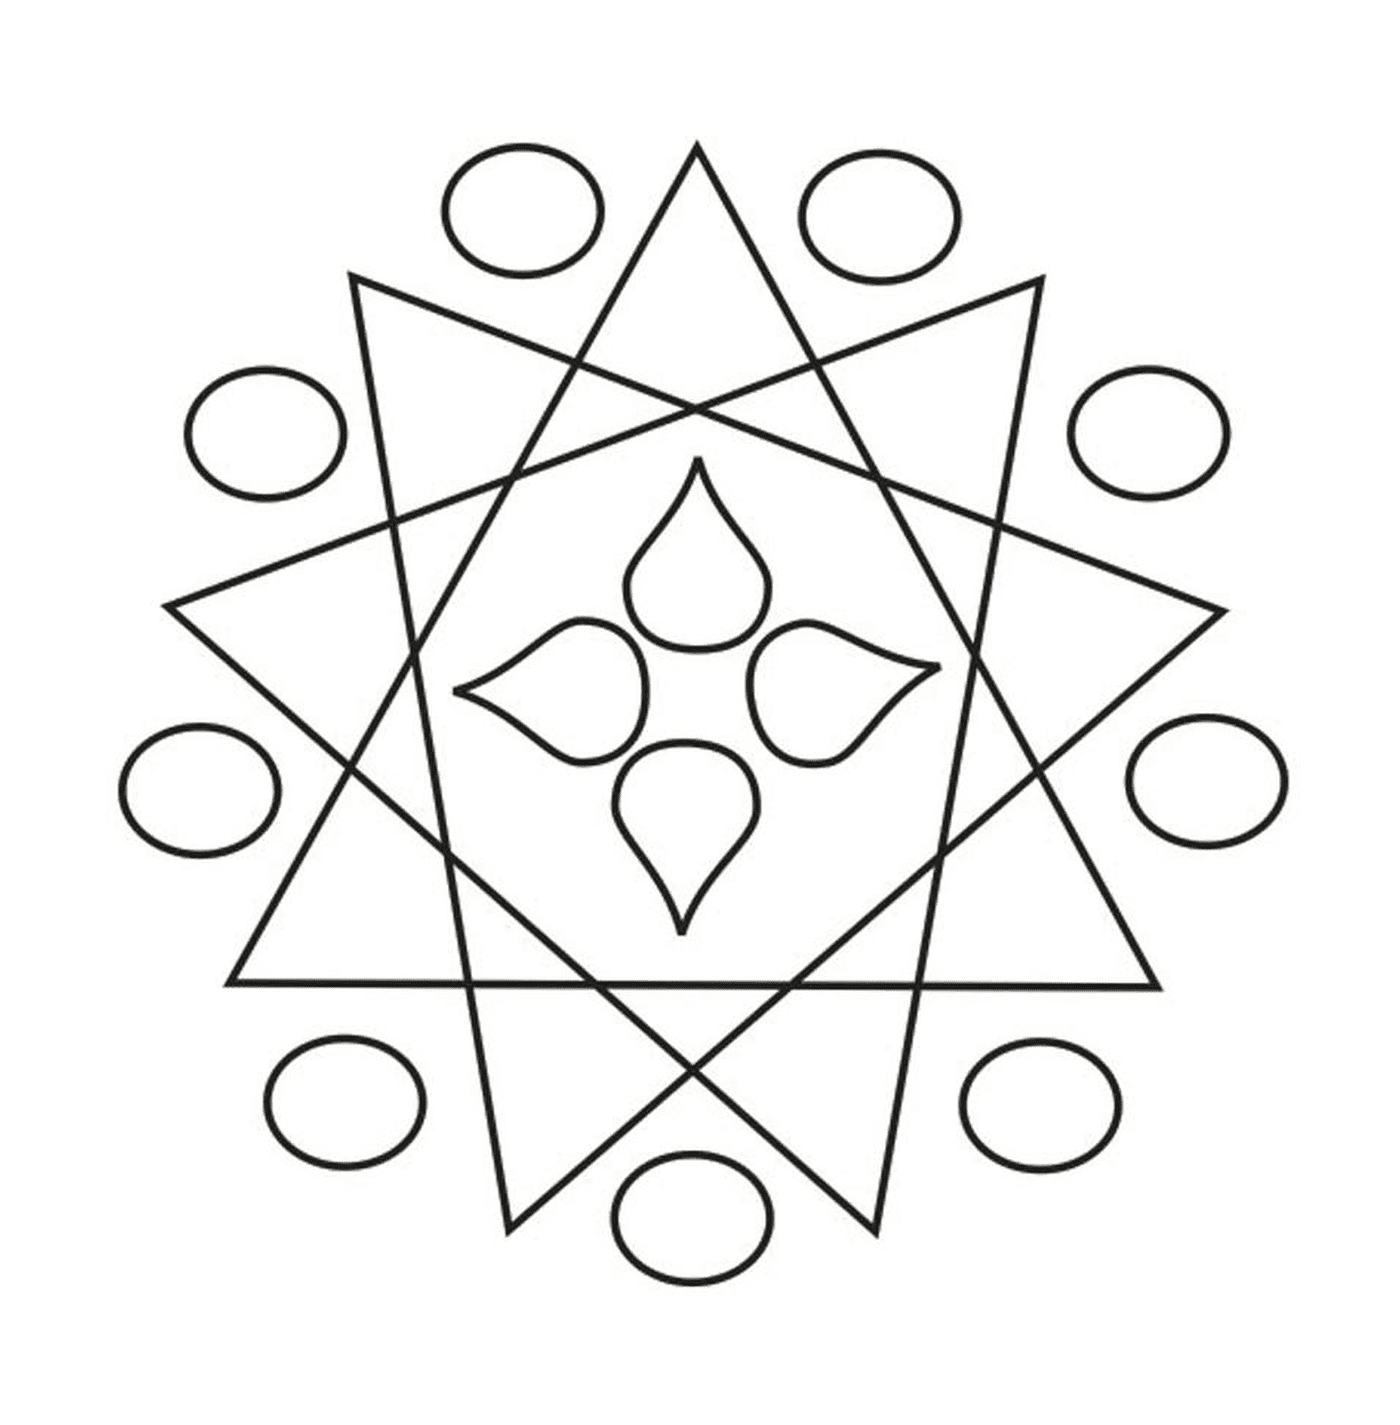  Un dibujo geométrico 